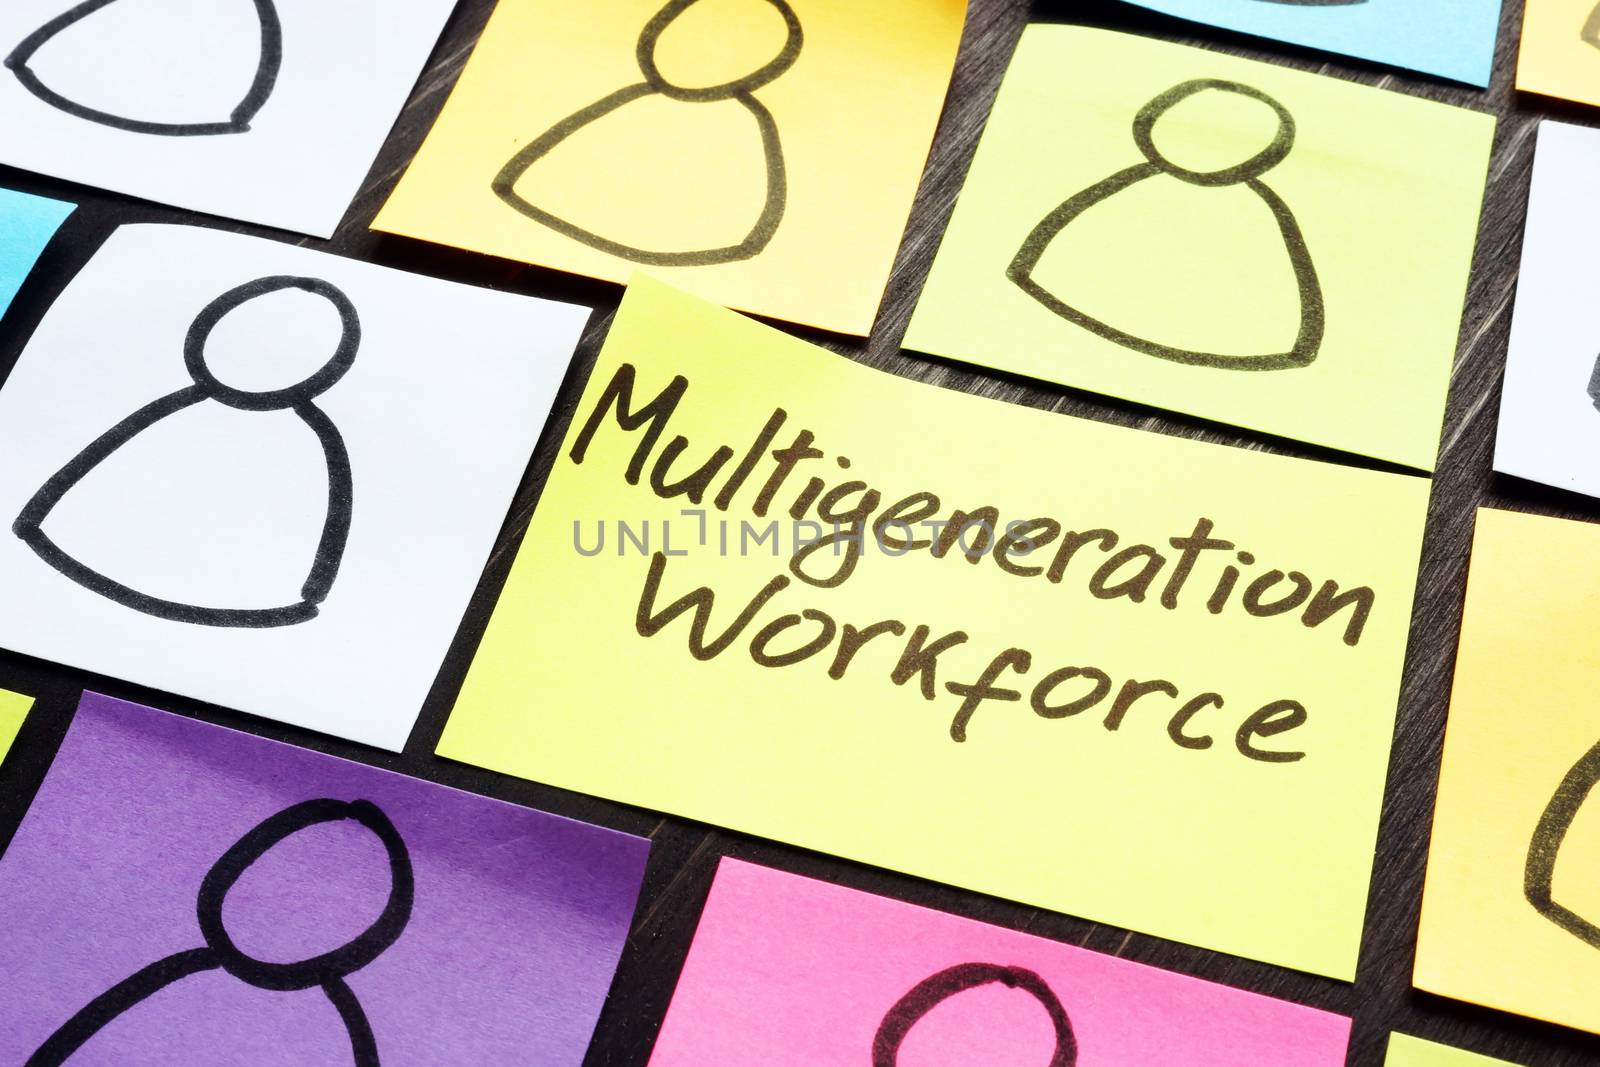 Multigeneration workforce concept. Multicolored memo sticks with figures. by designer491